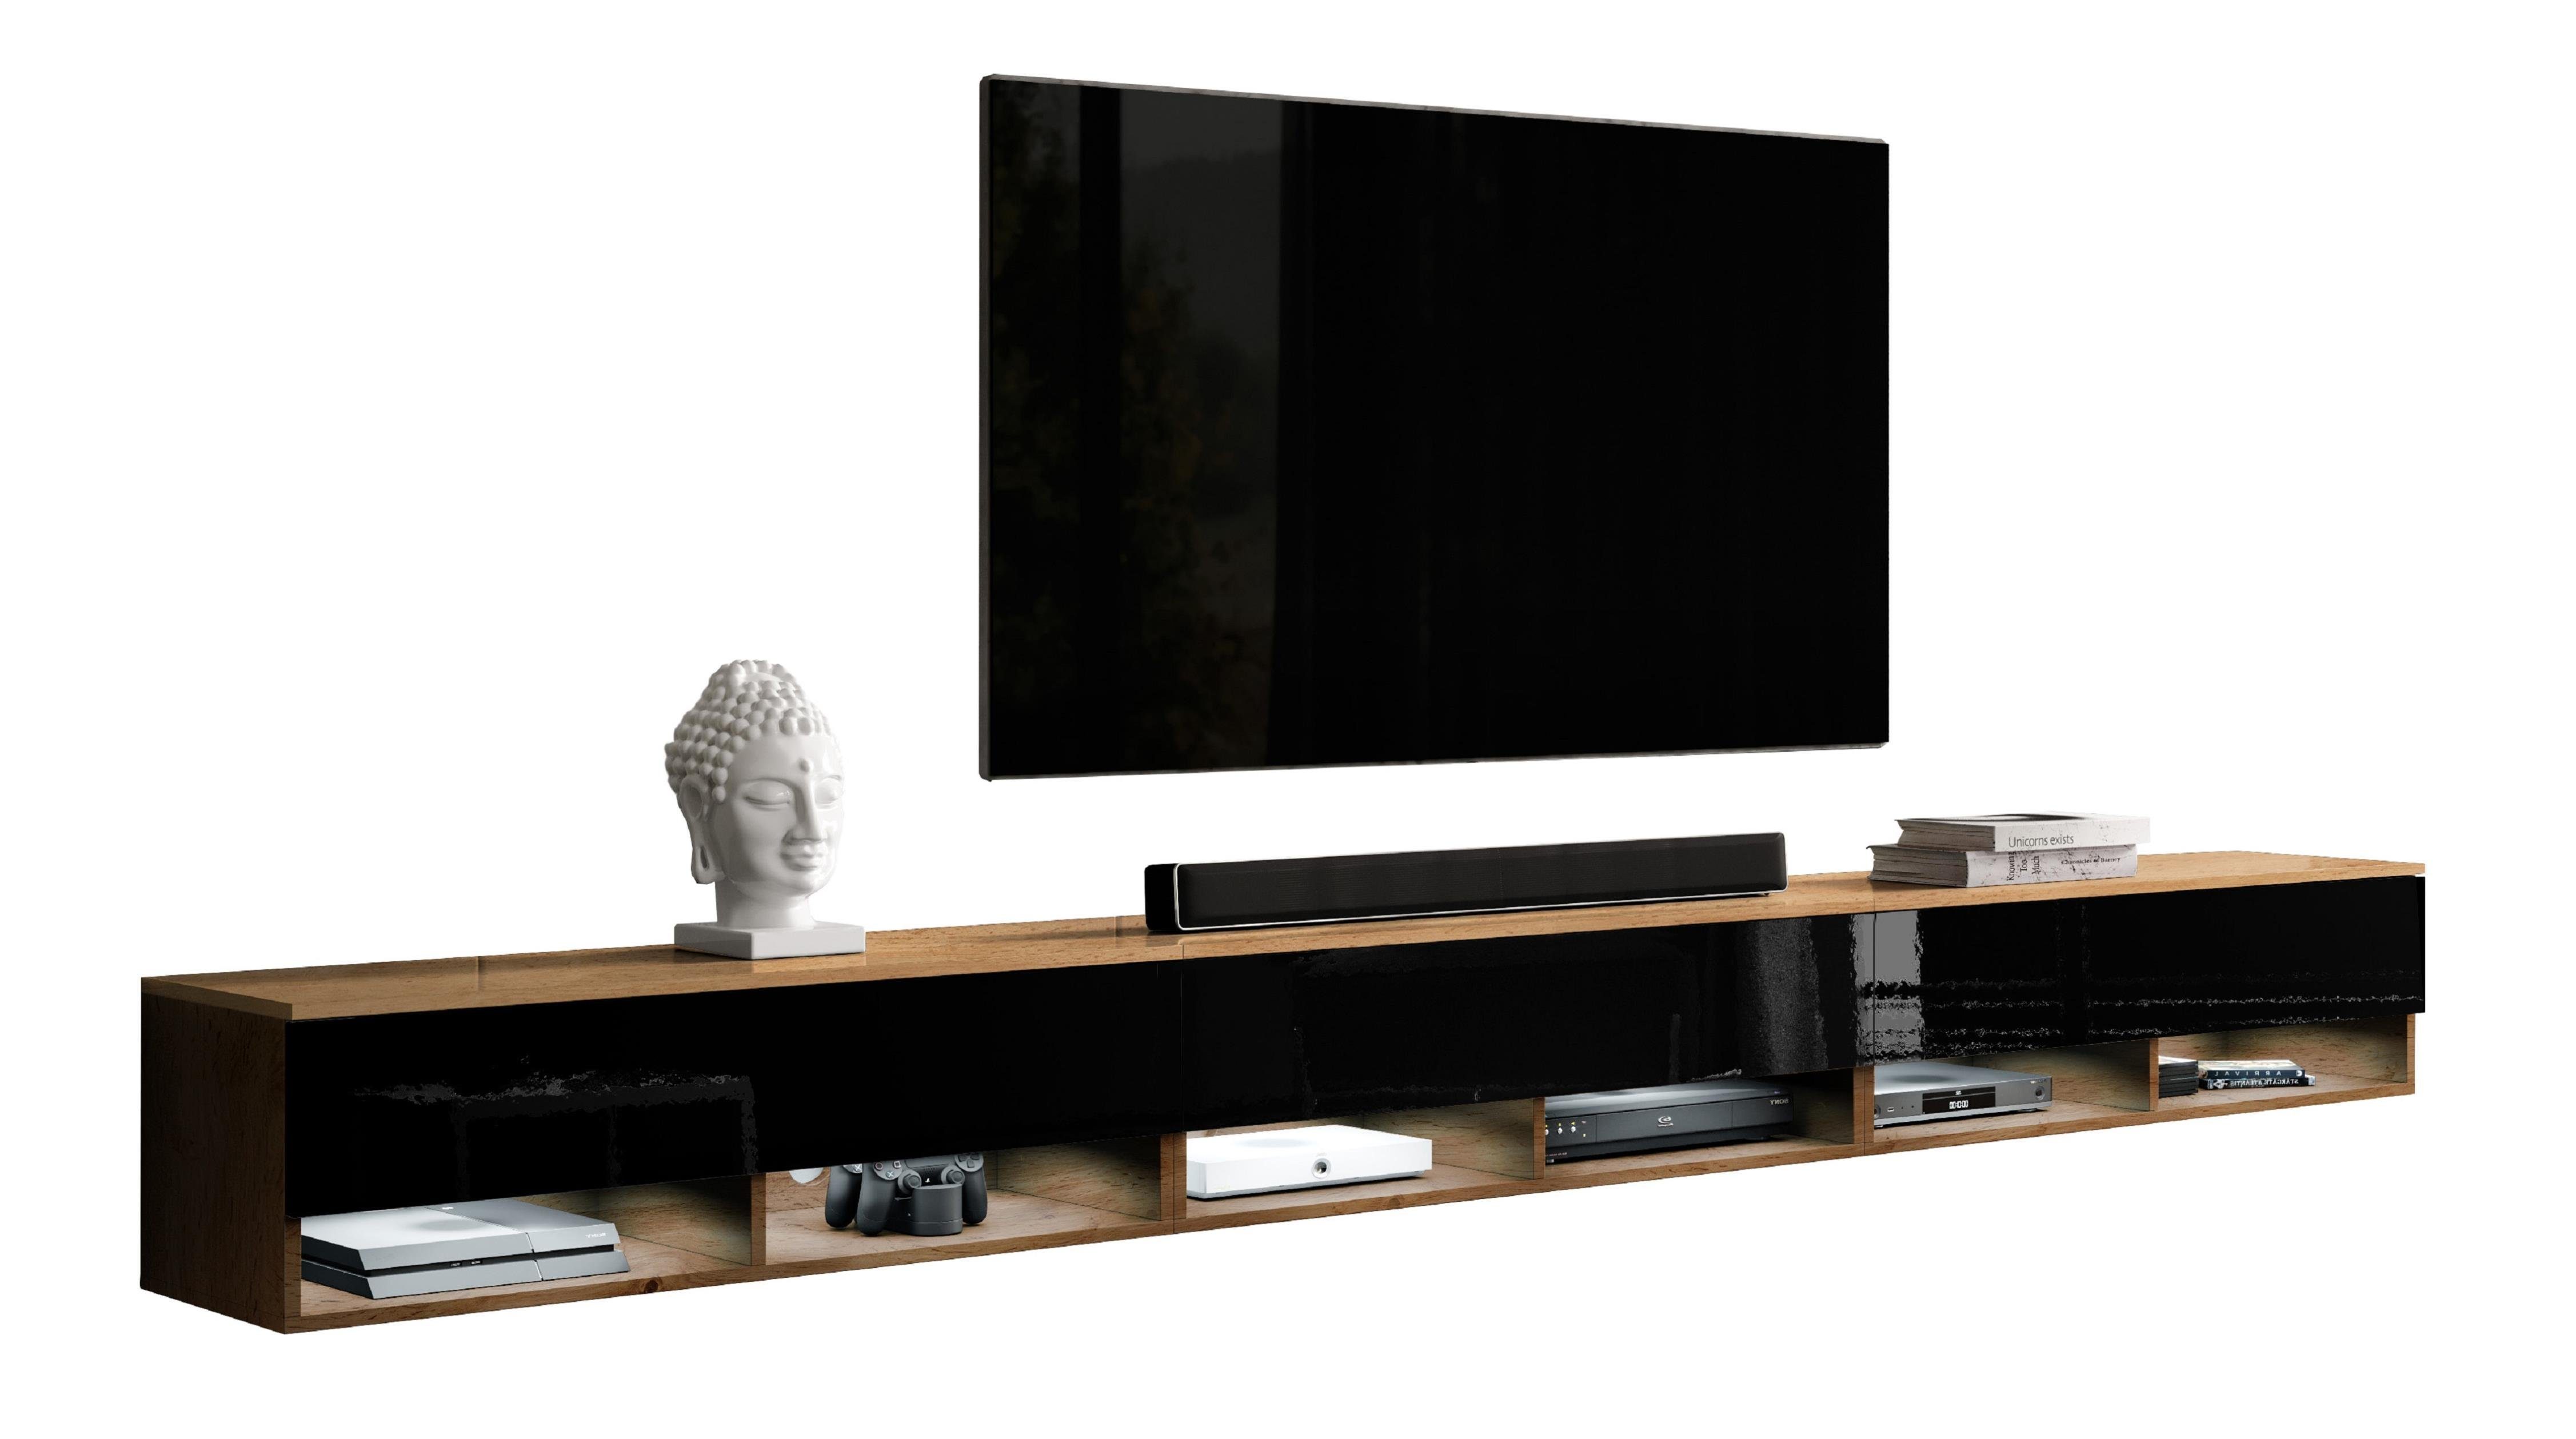 H34 Glanz x B300 ohne TV-Schrank 300 x Furnix 3 LED Lowboard TV-Kommode cm cm Wotan/Schwarz mit T32 Türen ALYX